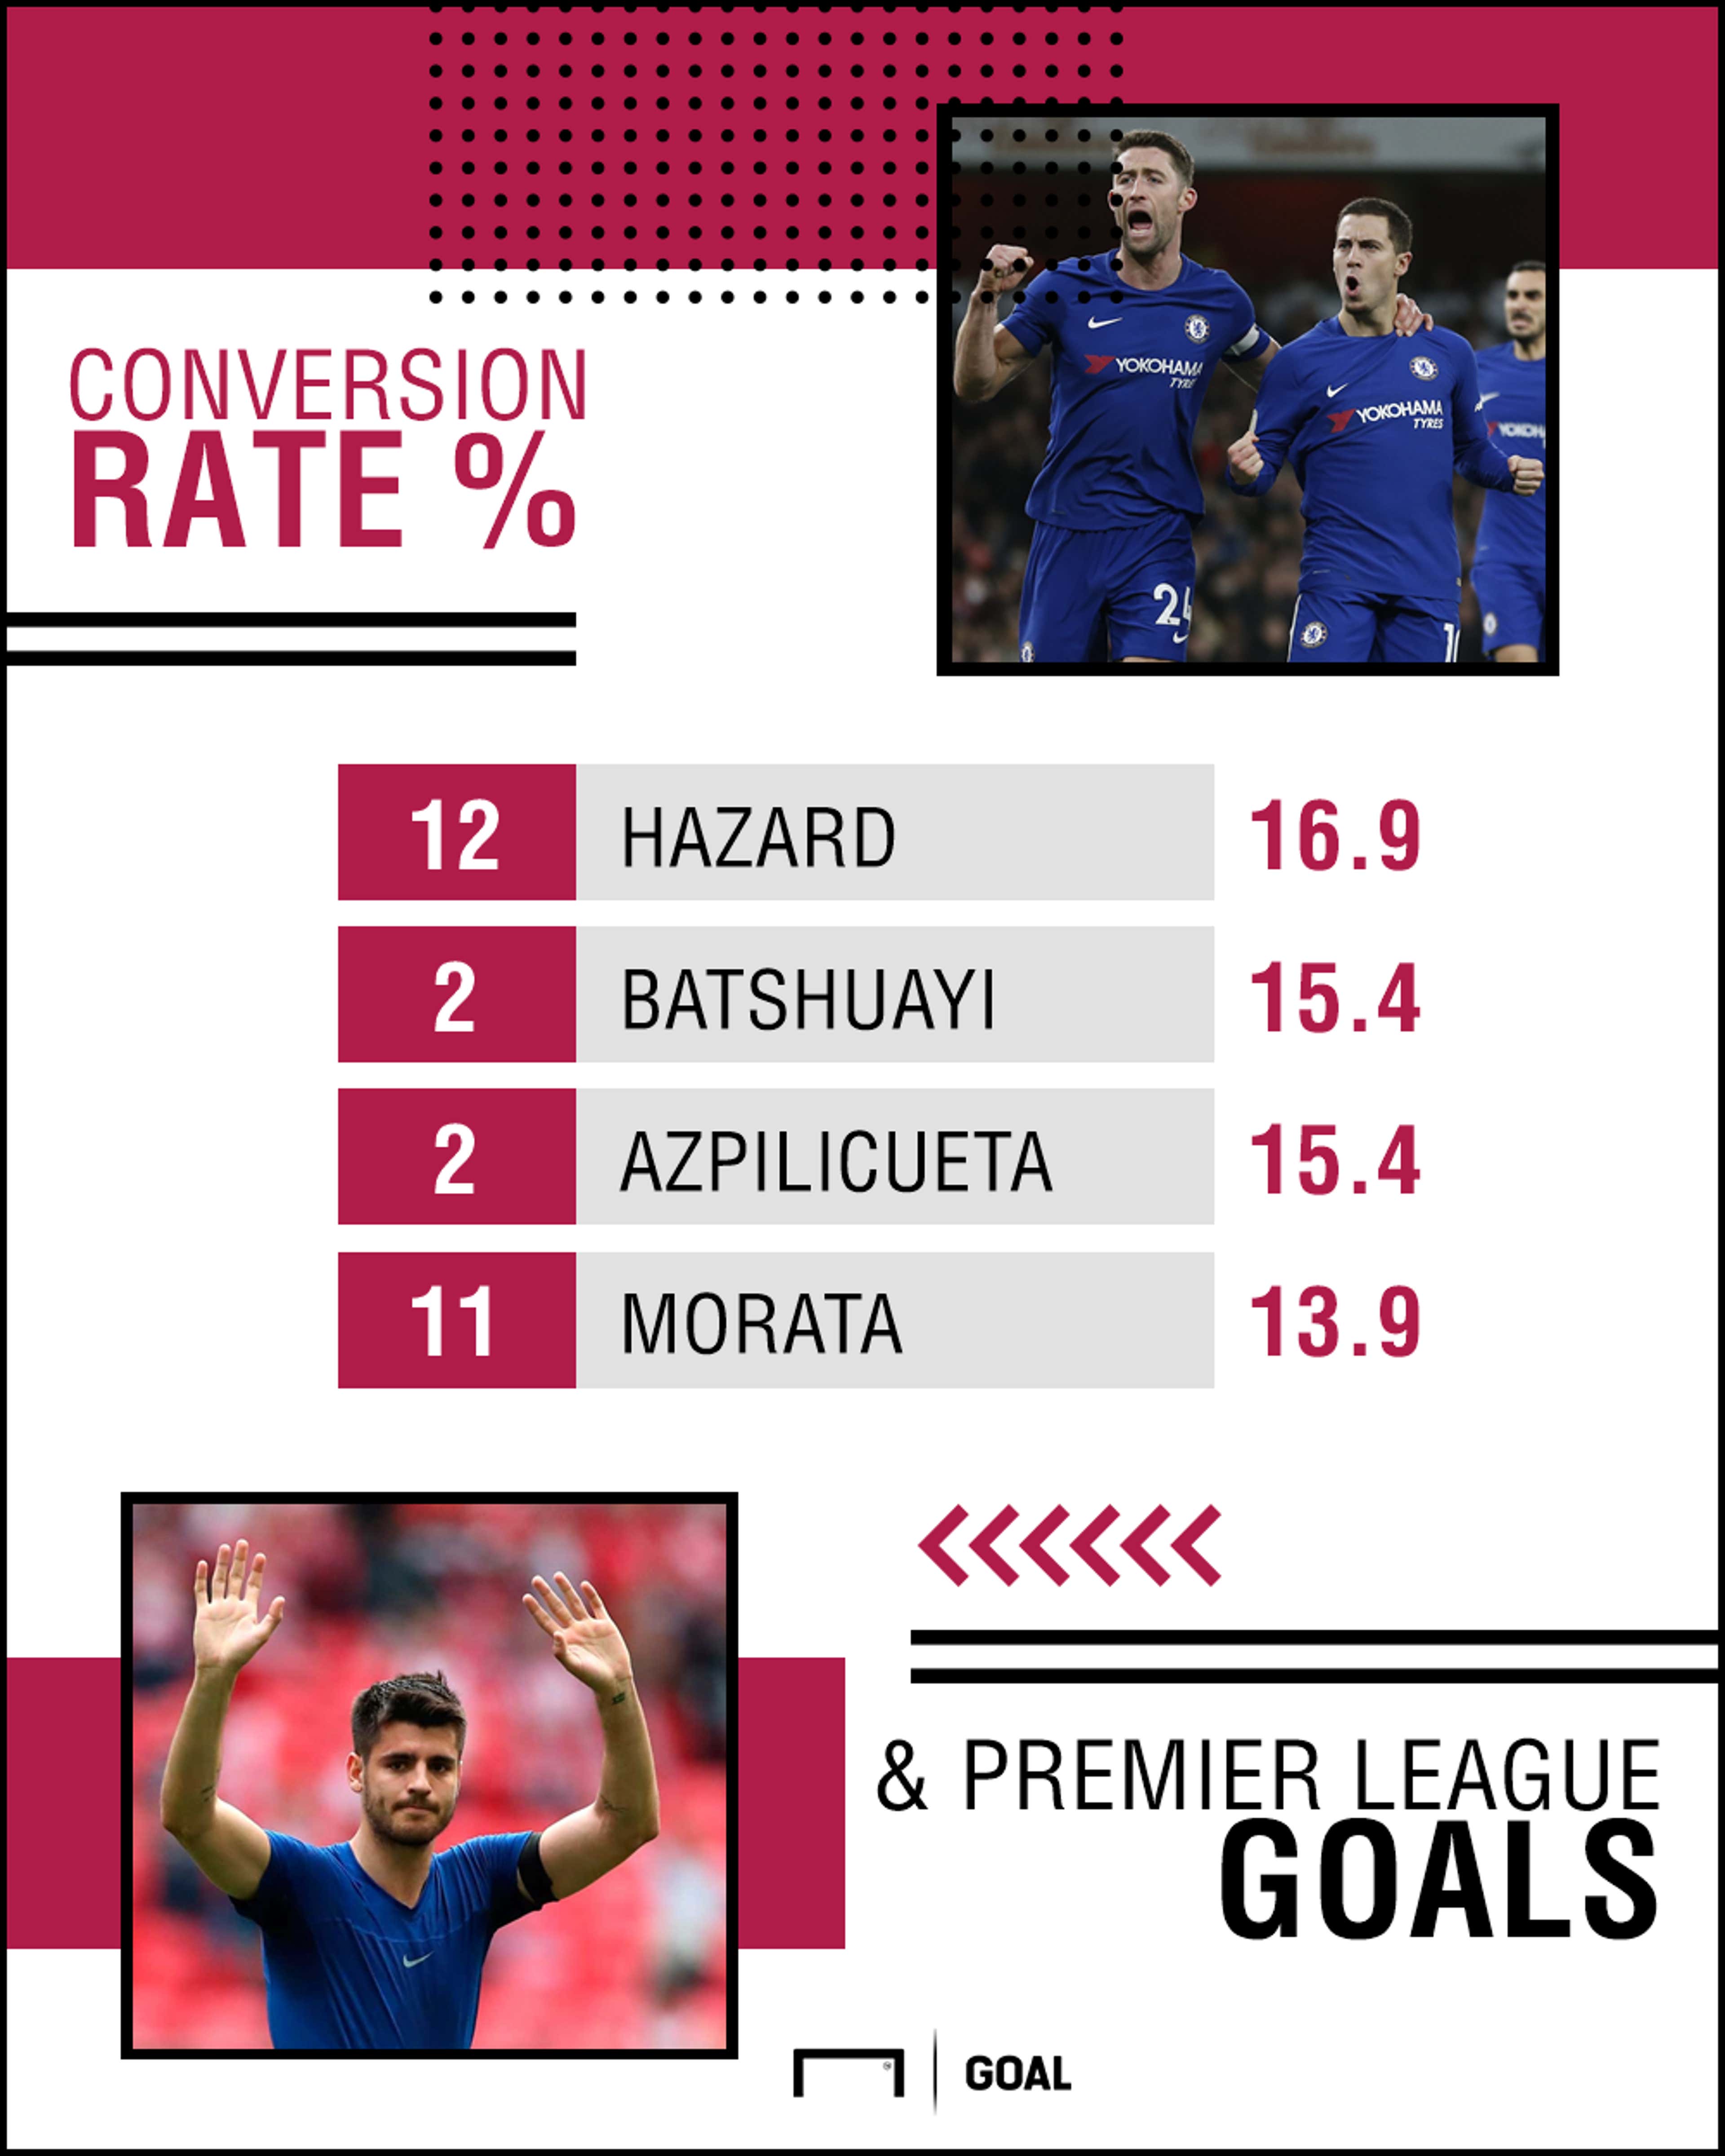 Chelsea shot conversion rate